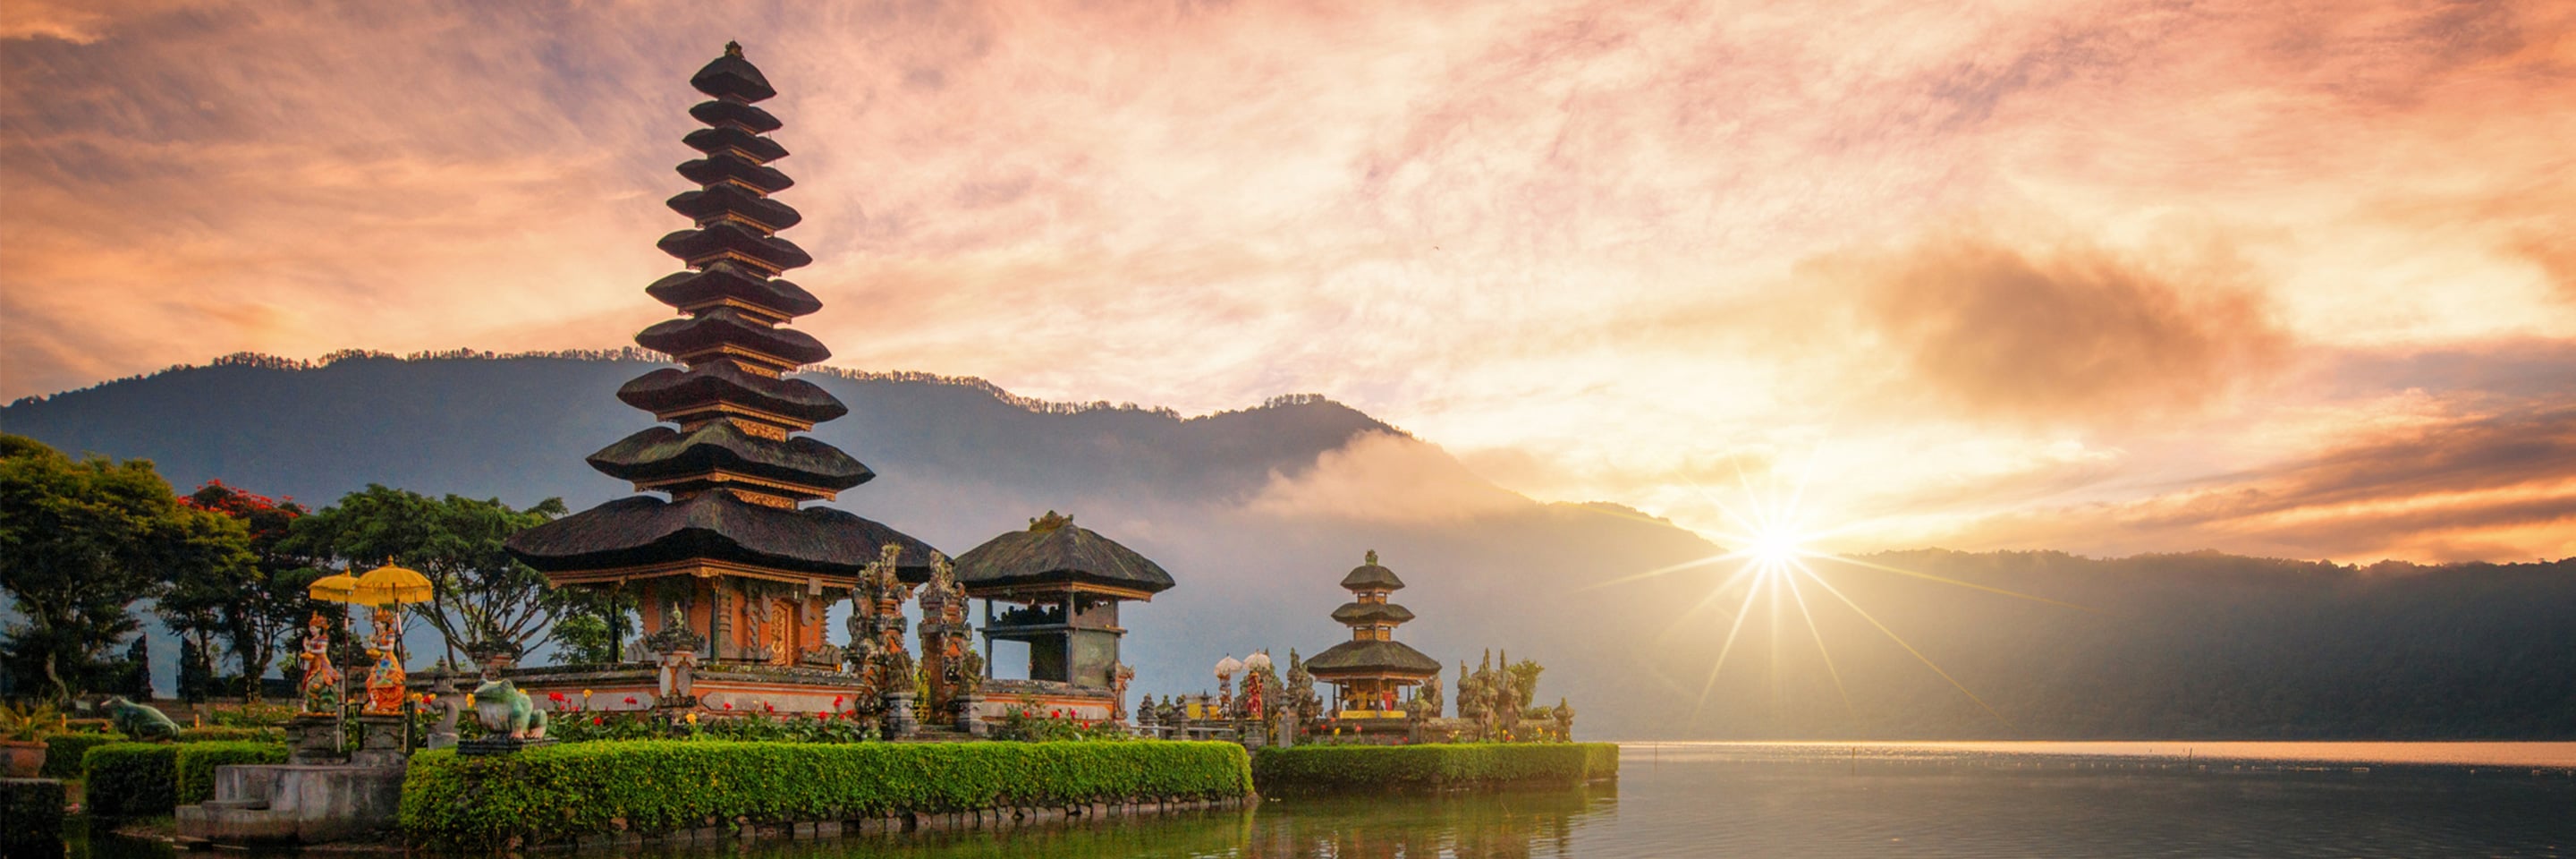 Il tempio Pura Ulun Danu Bratan a Bali al tramonto. Hotel a Bali - Marriott.
